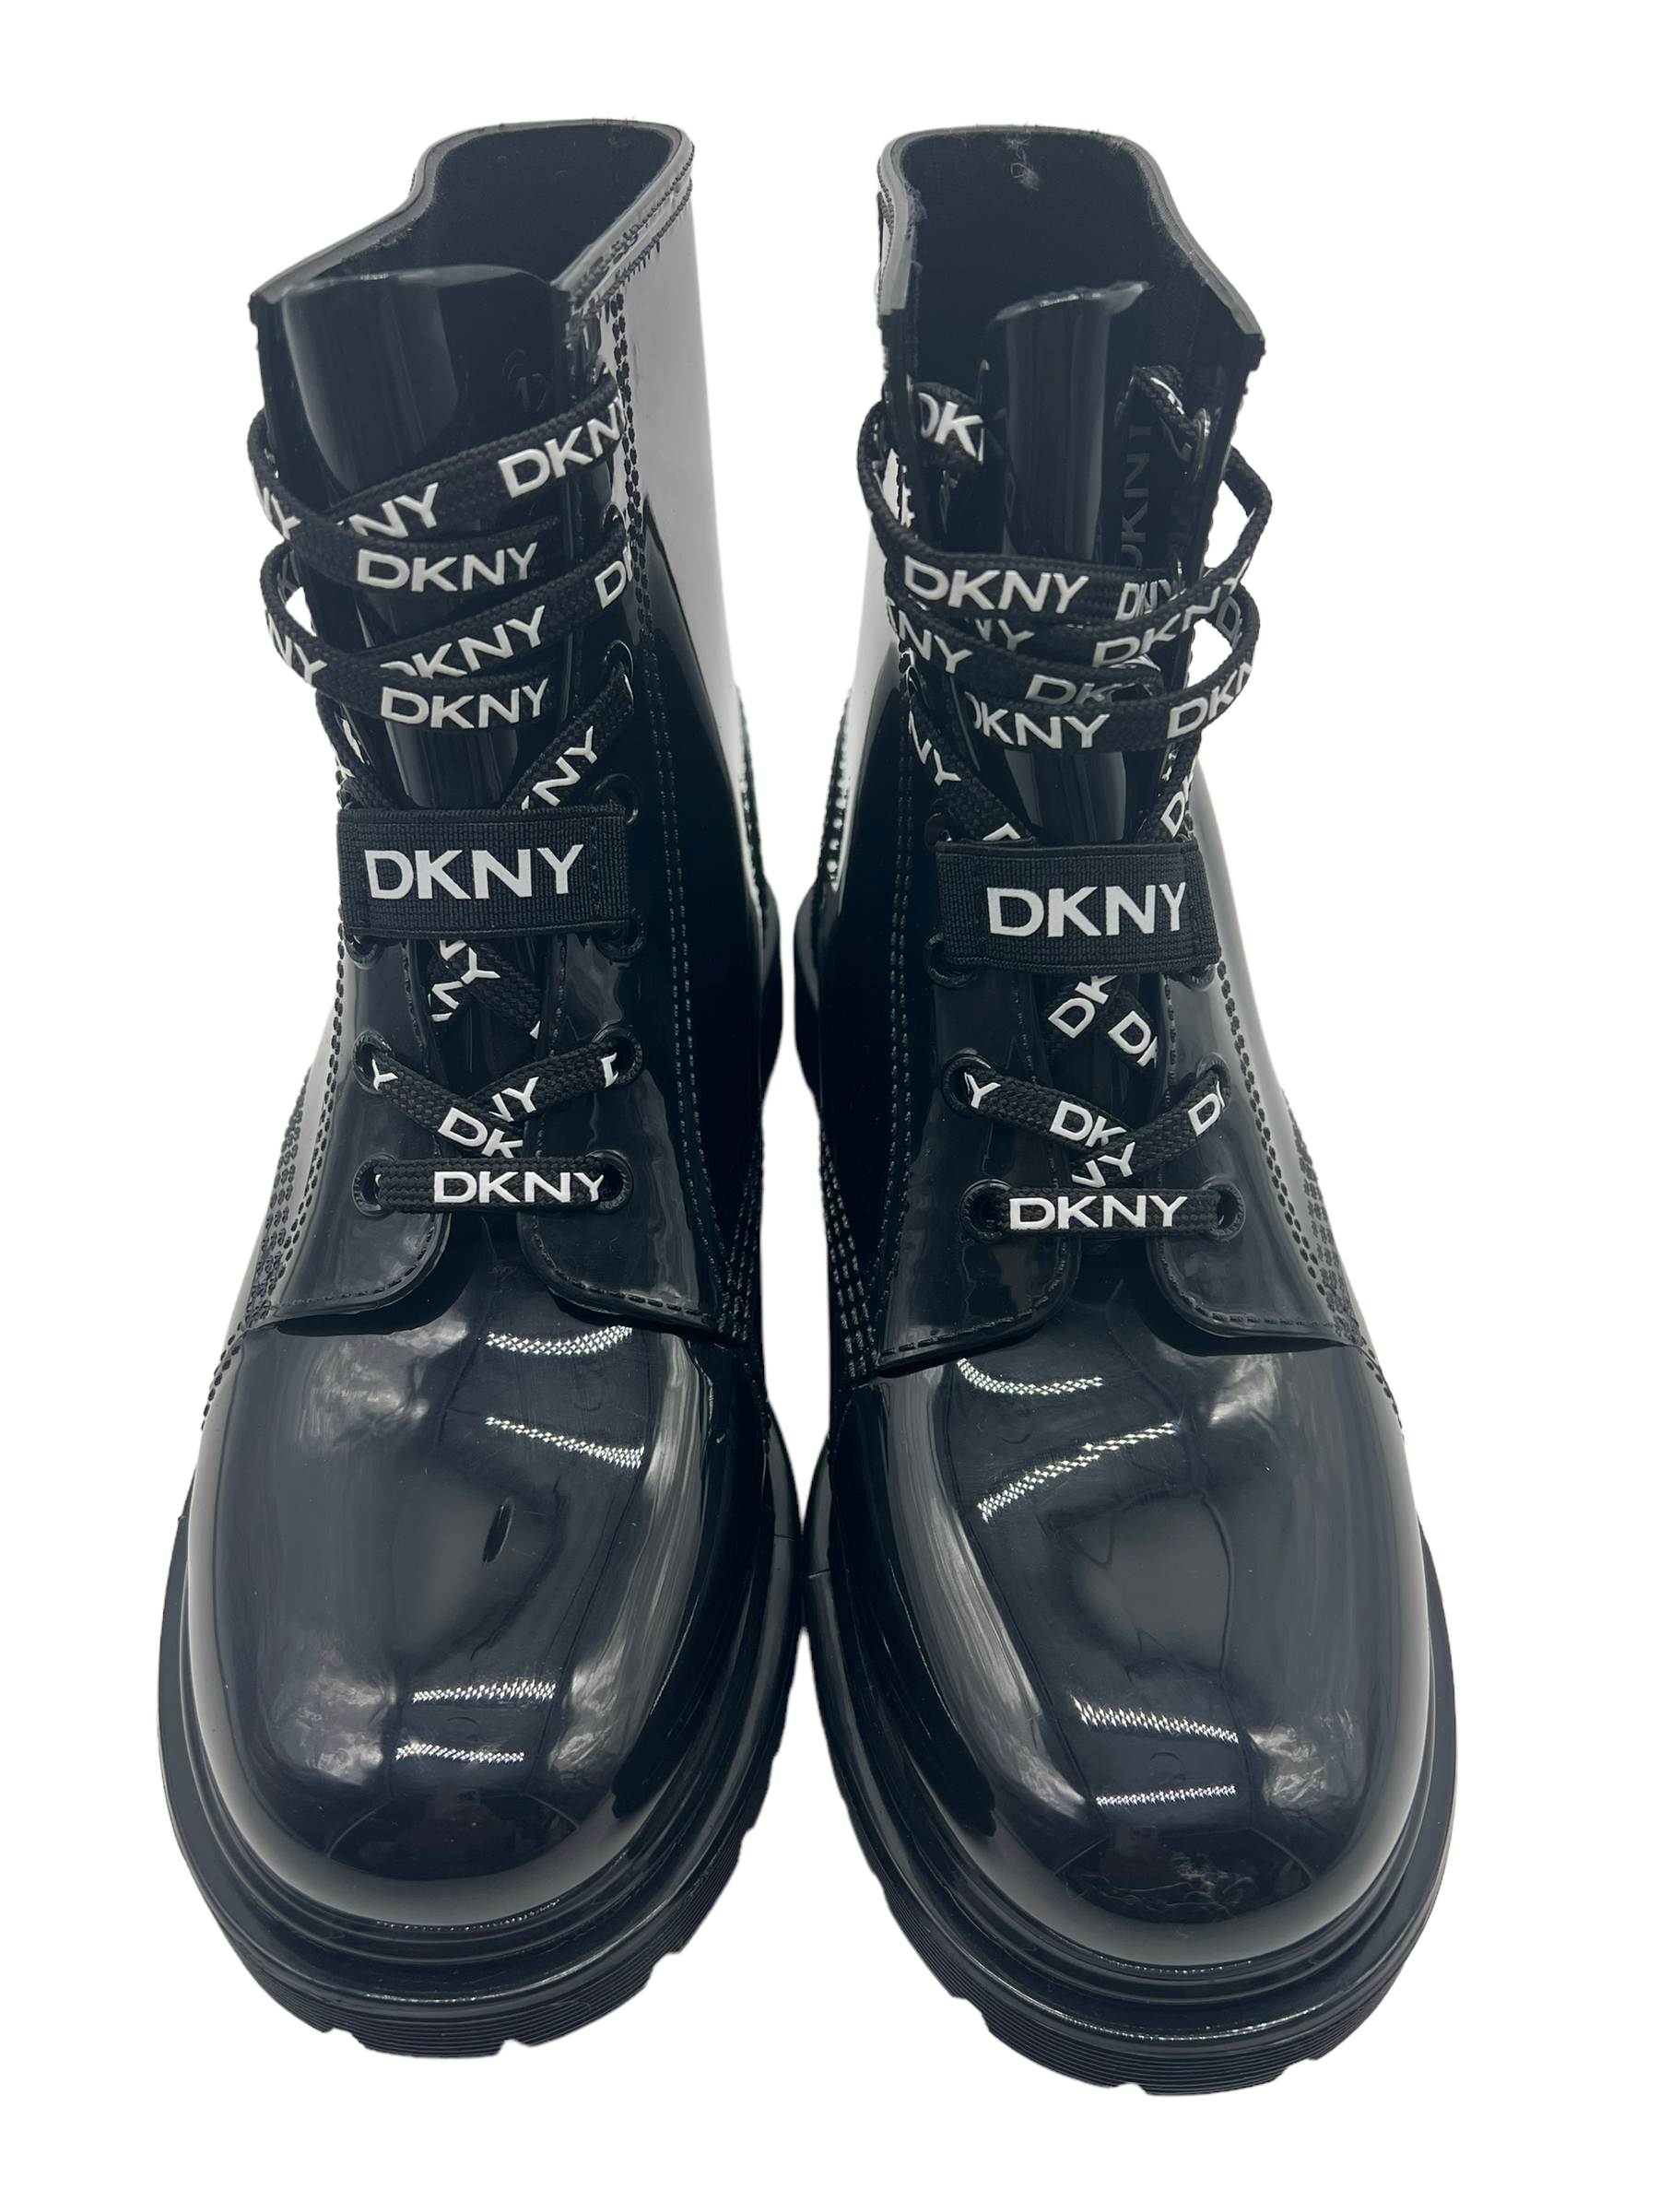 DKNY Women's Tilly Lace-Up Rain Booties - Macy's